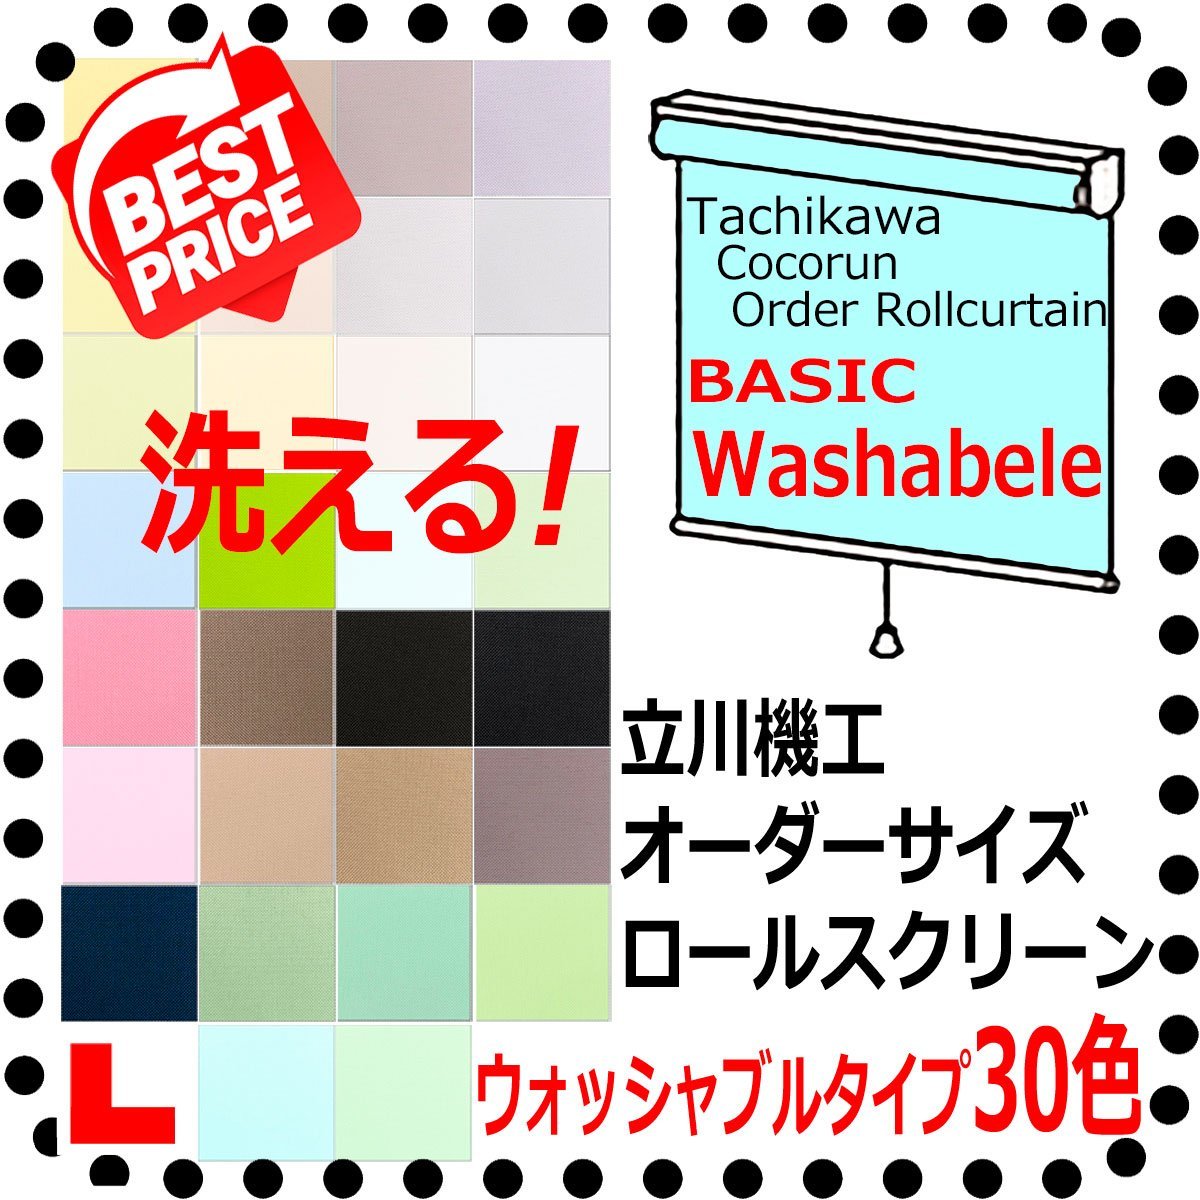  Tachikawa заказ roll занавески здесь runBASIC... омыватель bru модель ширина [136~180cm]X высота [30~40cm]